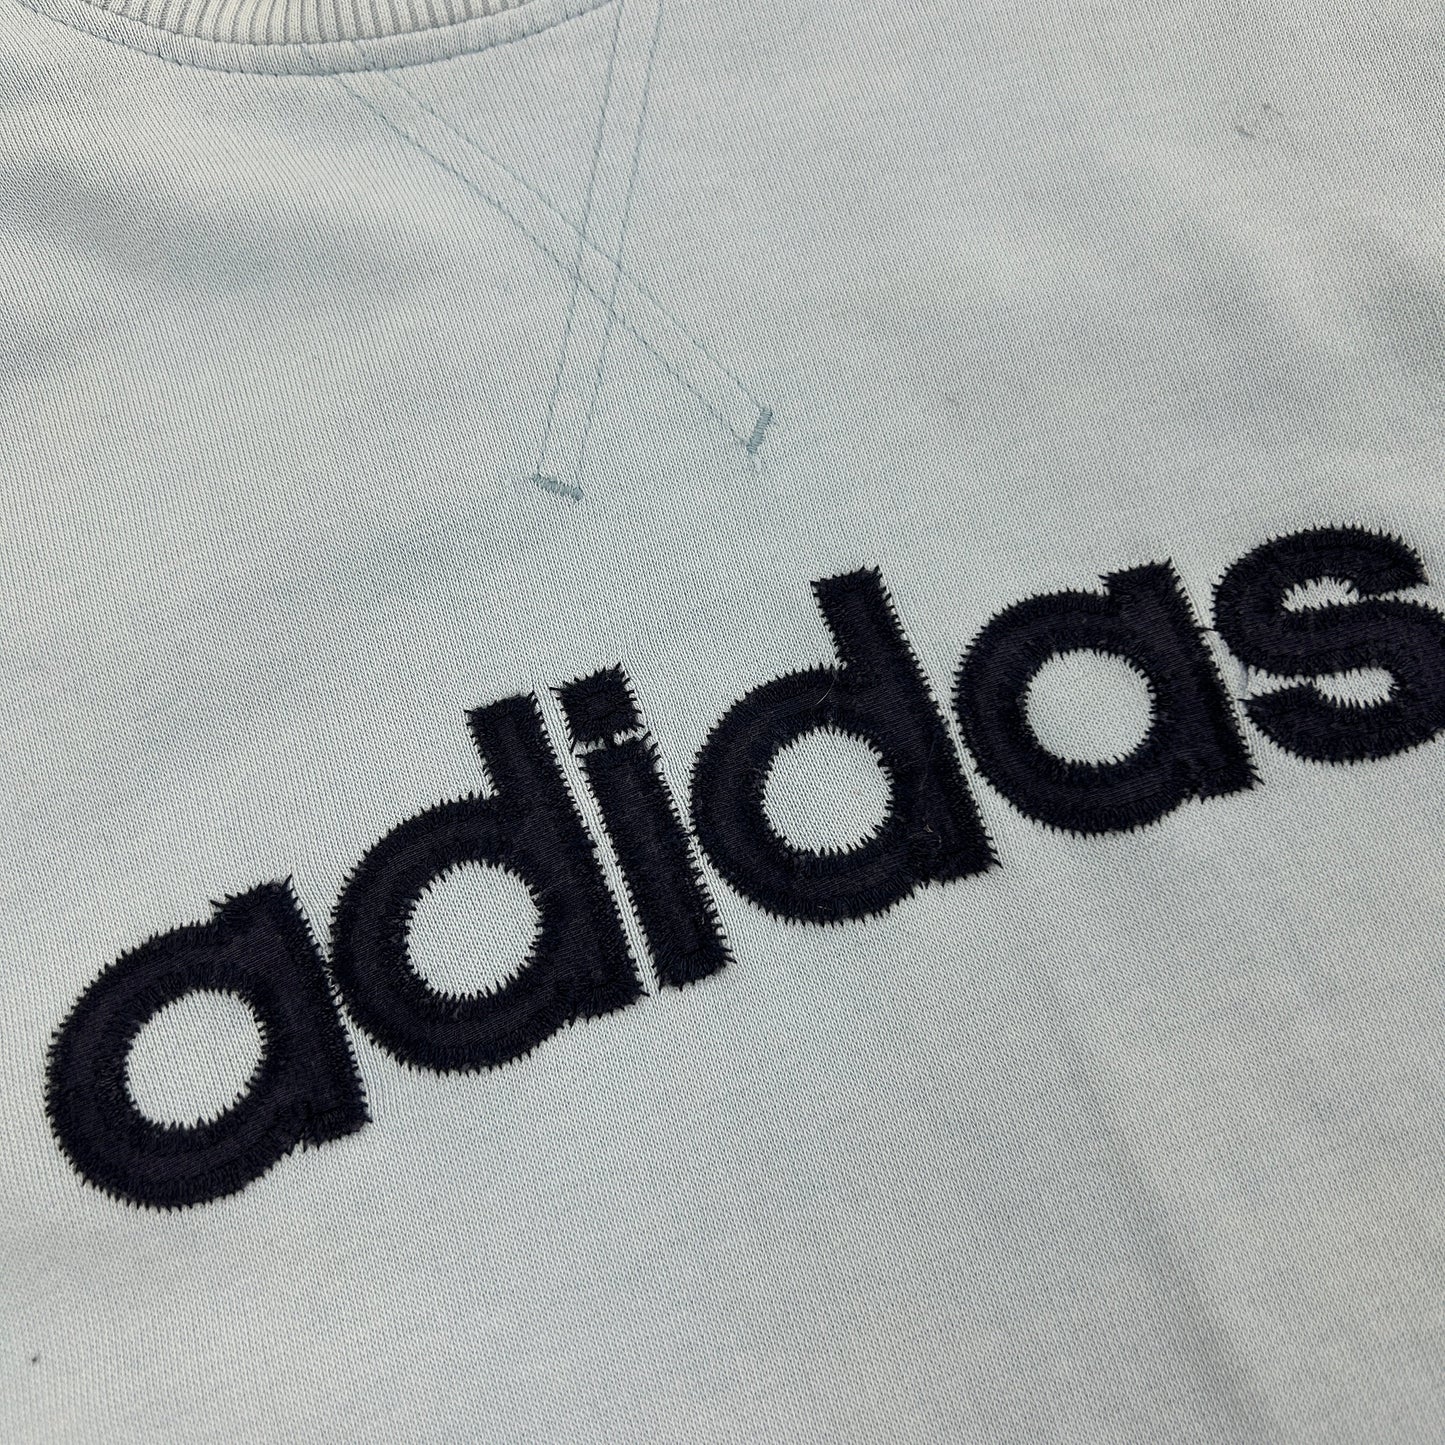 Vintage Adidas Logo Sweatshirt Size XL